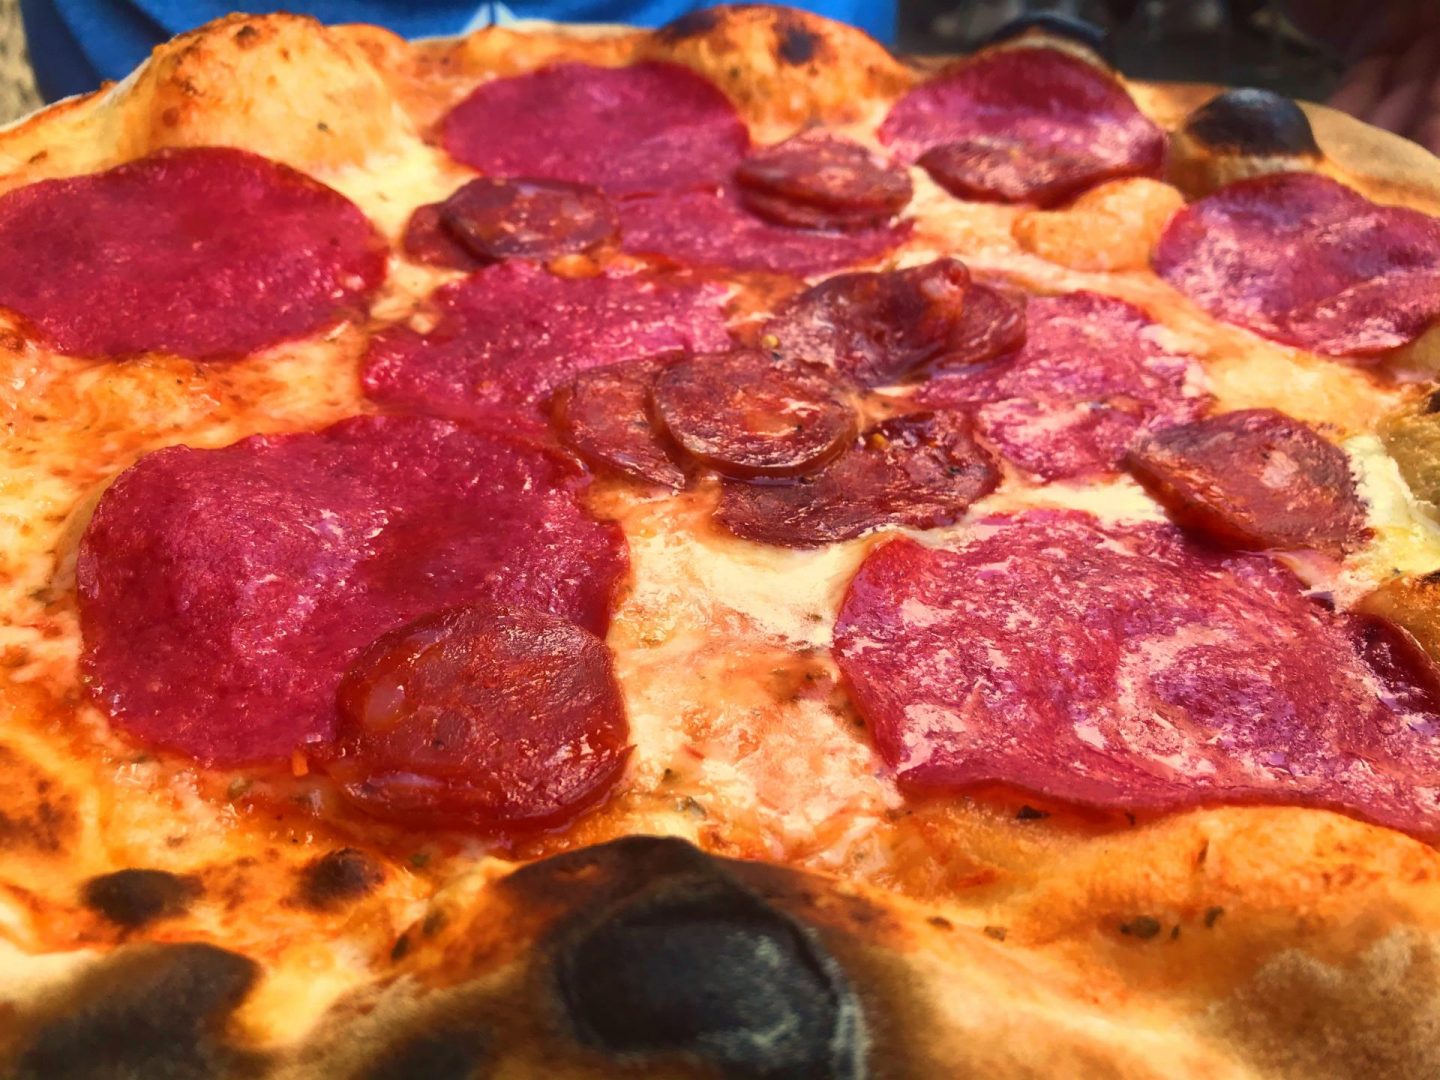 Erfahrung Bewertung Kritik Caminetto Köln Pizza Diavolo Salami Foodblog Sternestulle